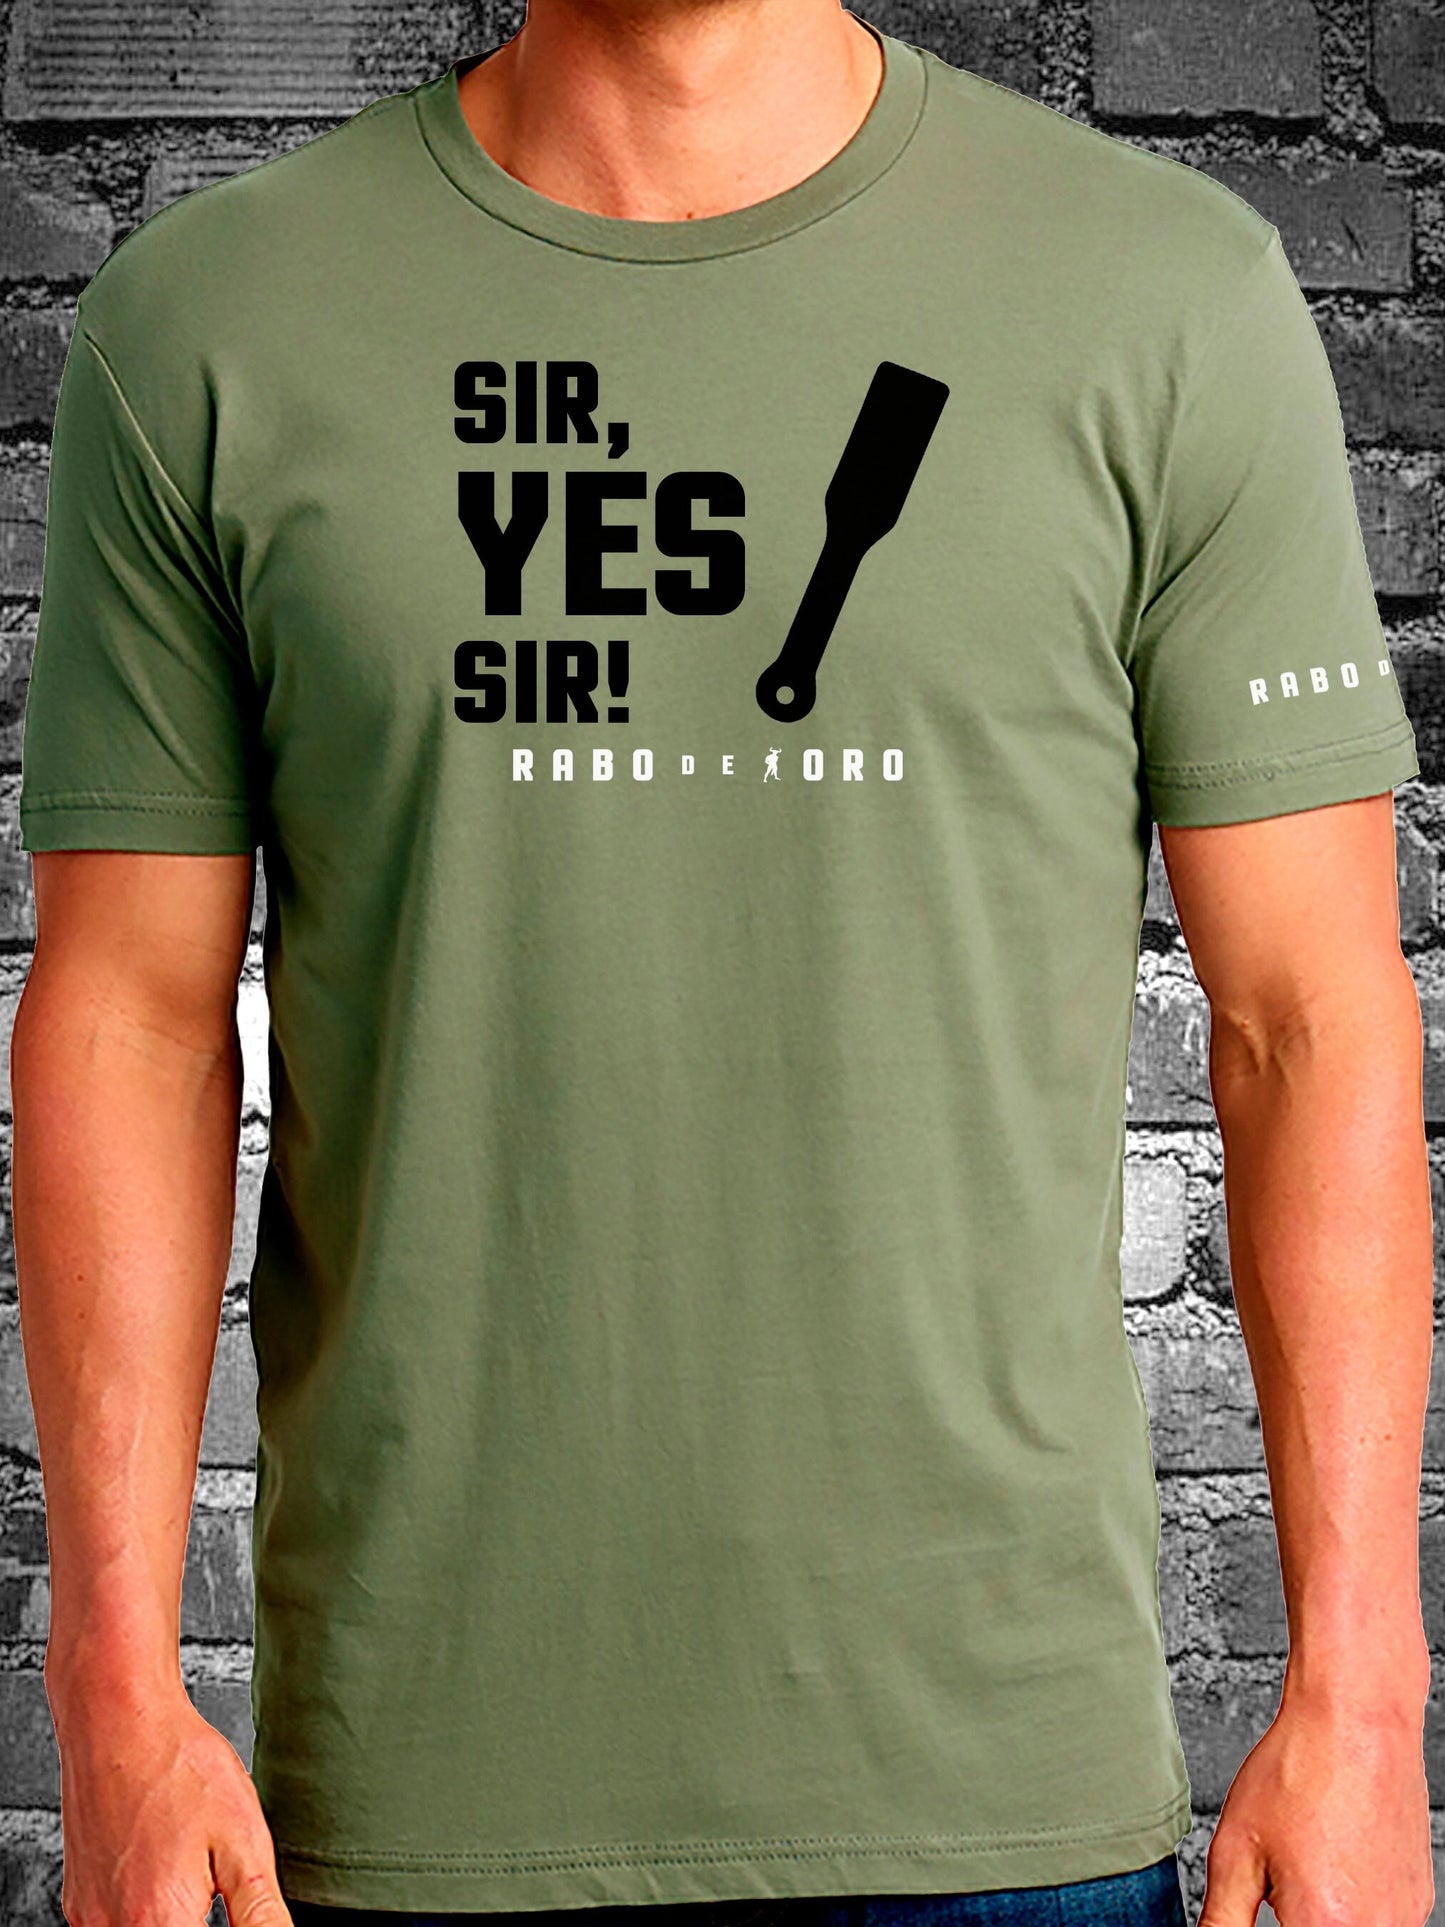 RaboDeToro - SIR, YES SIR! Camiseta verde oliva con detalle de paleta de azotes